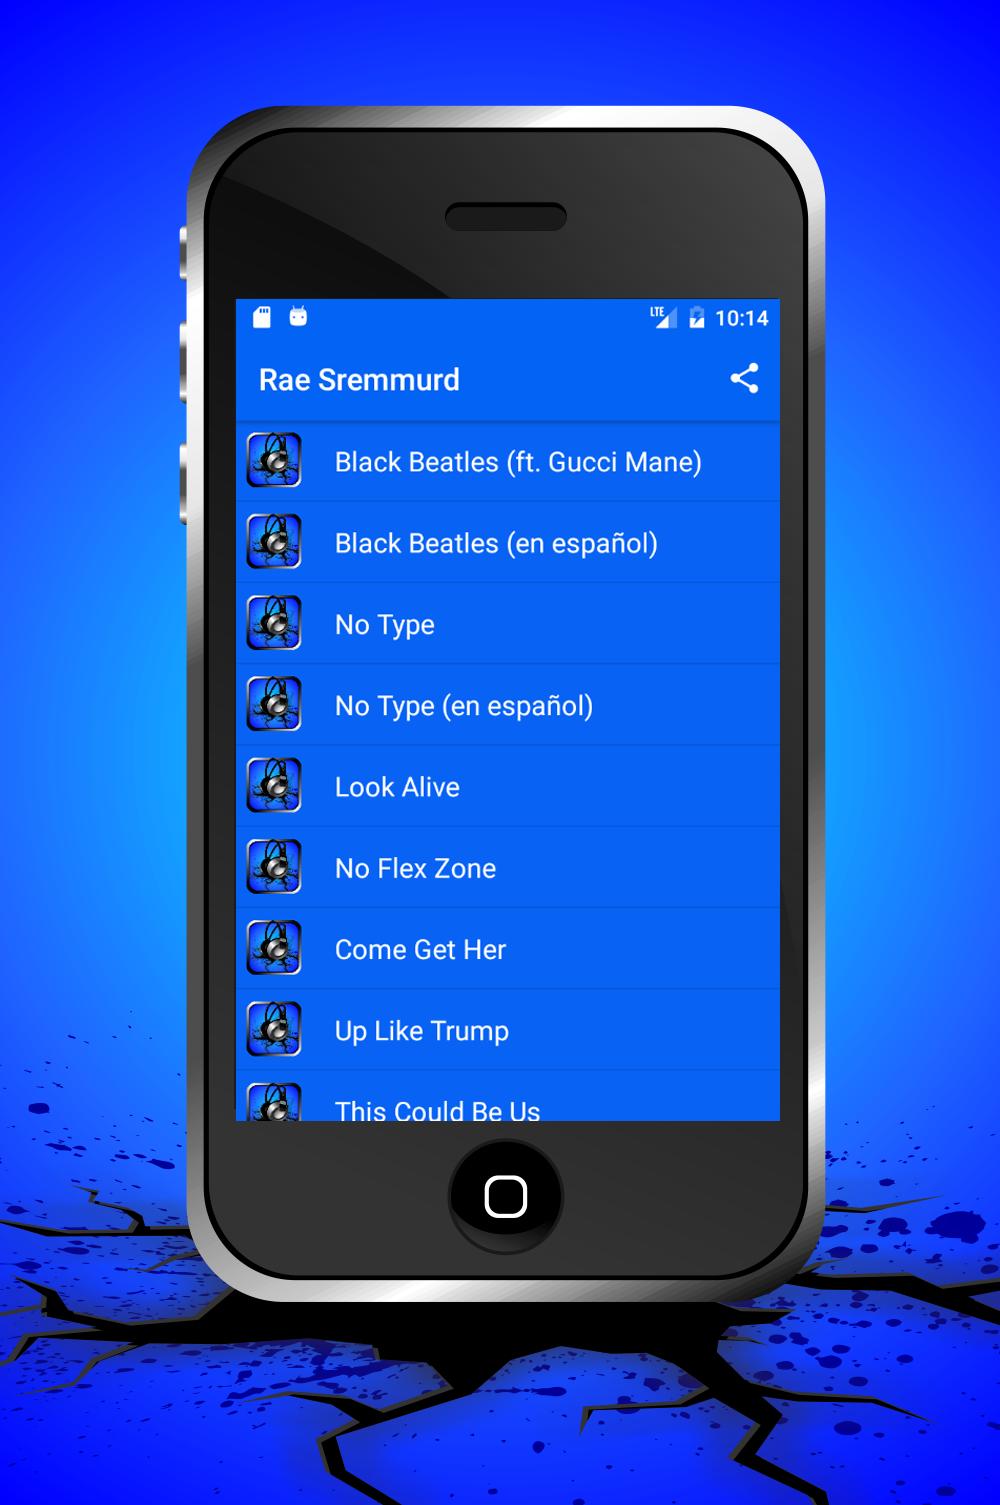 Black Beatles Lyrics for Android - APK Download